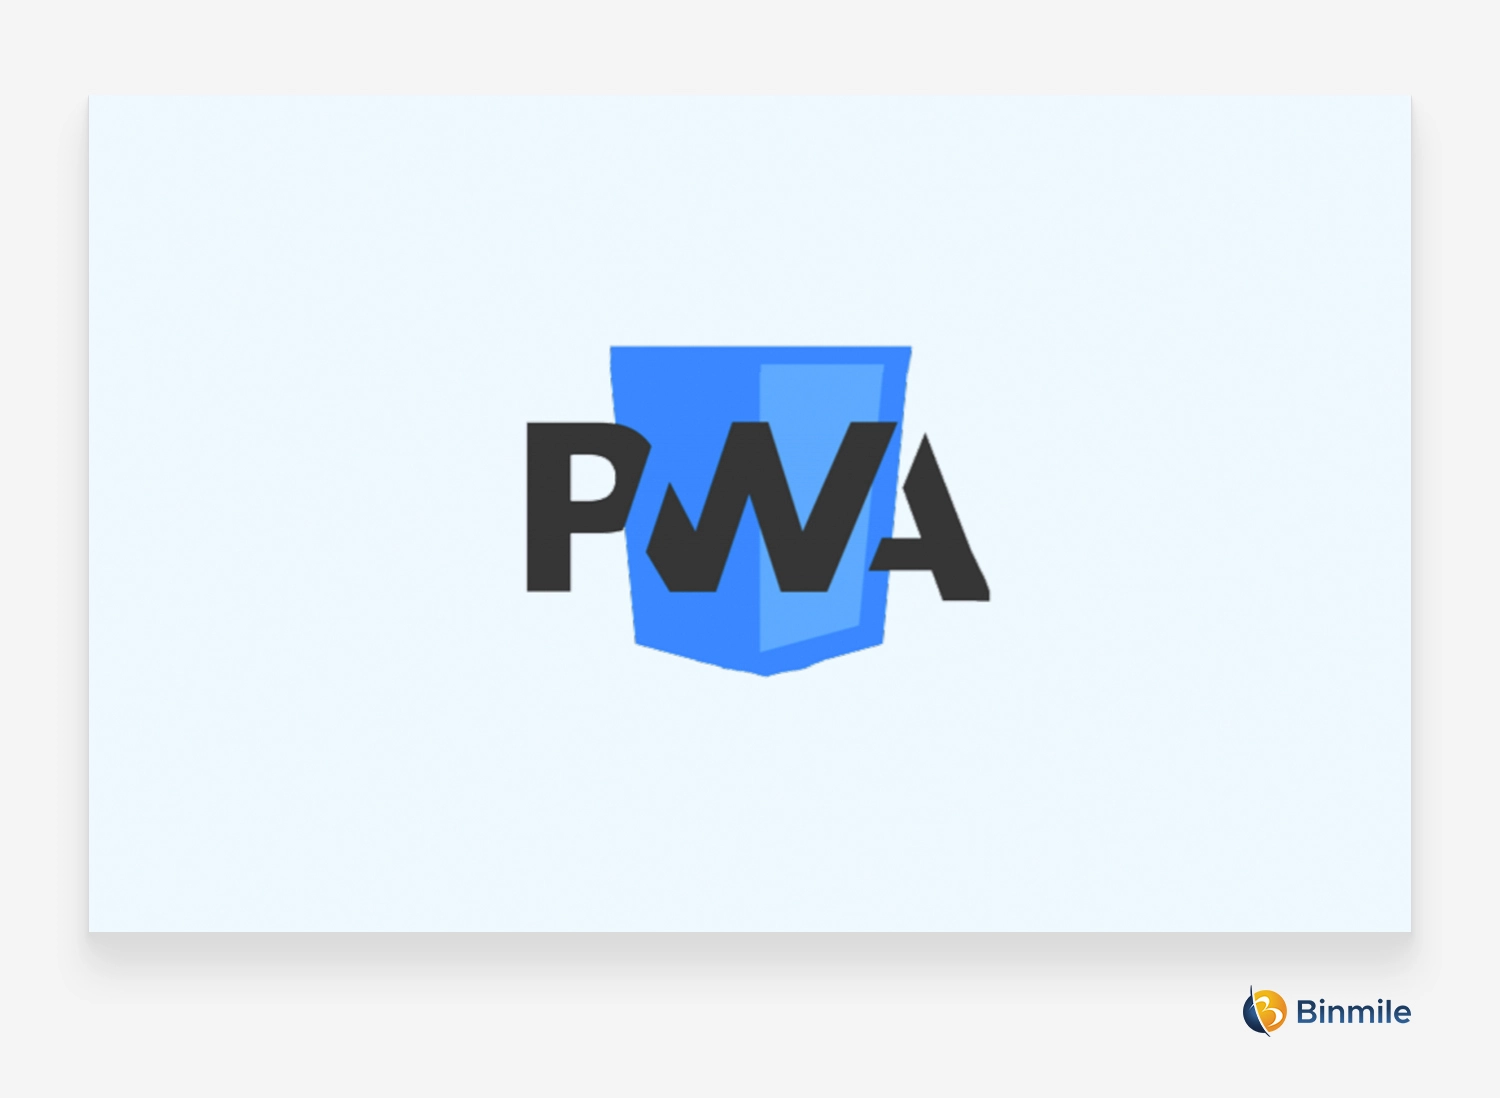 What is PWA | Binmile